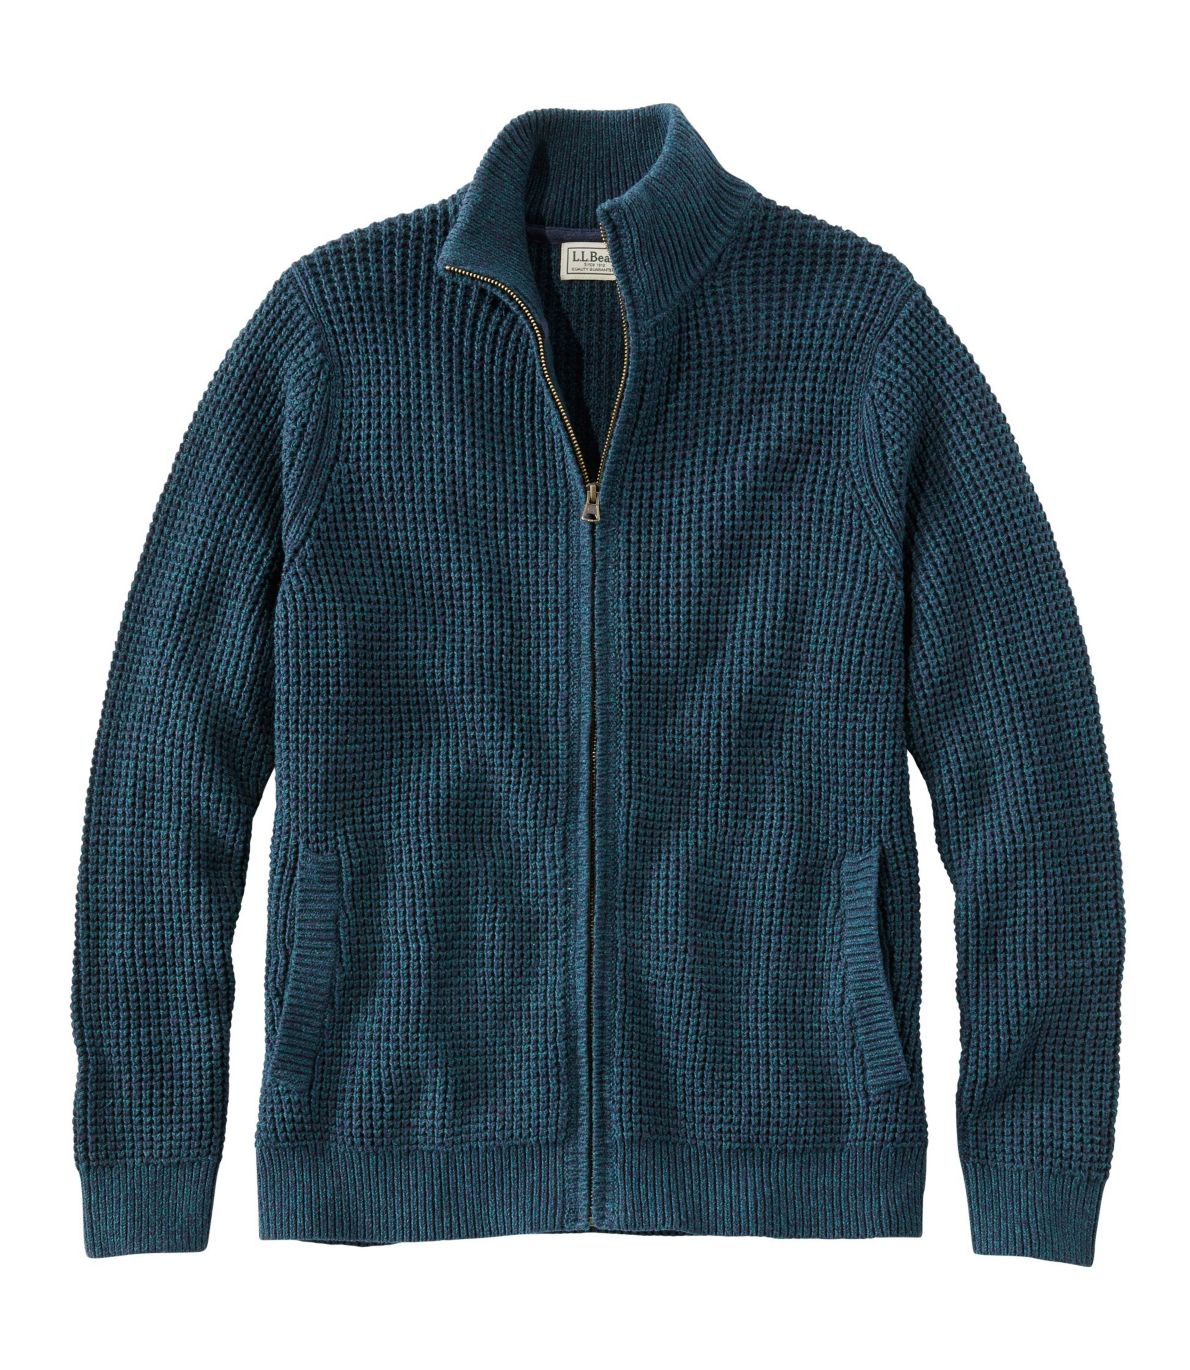 Men's Organic Cotton Sweater, Full Zip at L.L. Bean